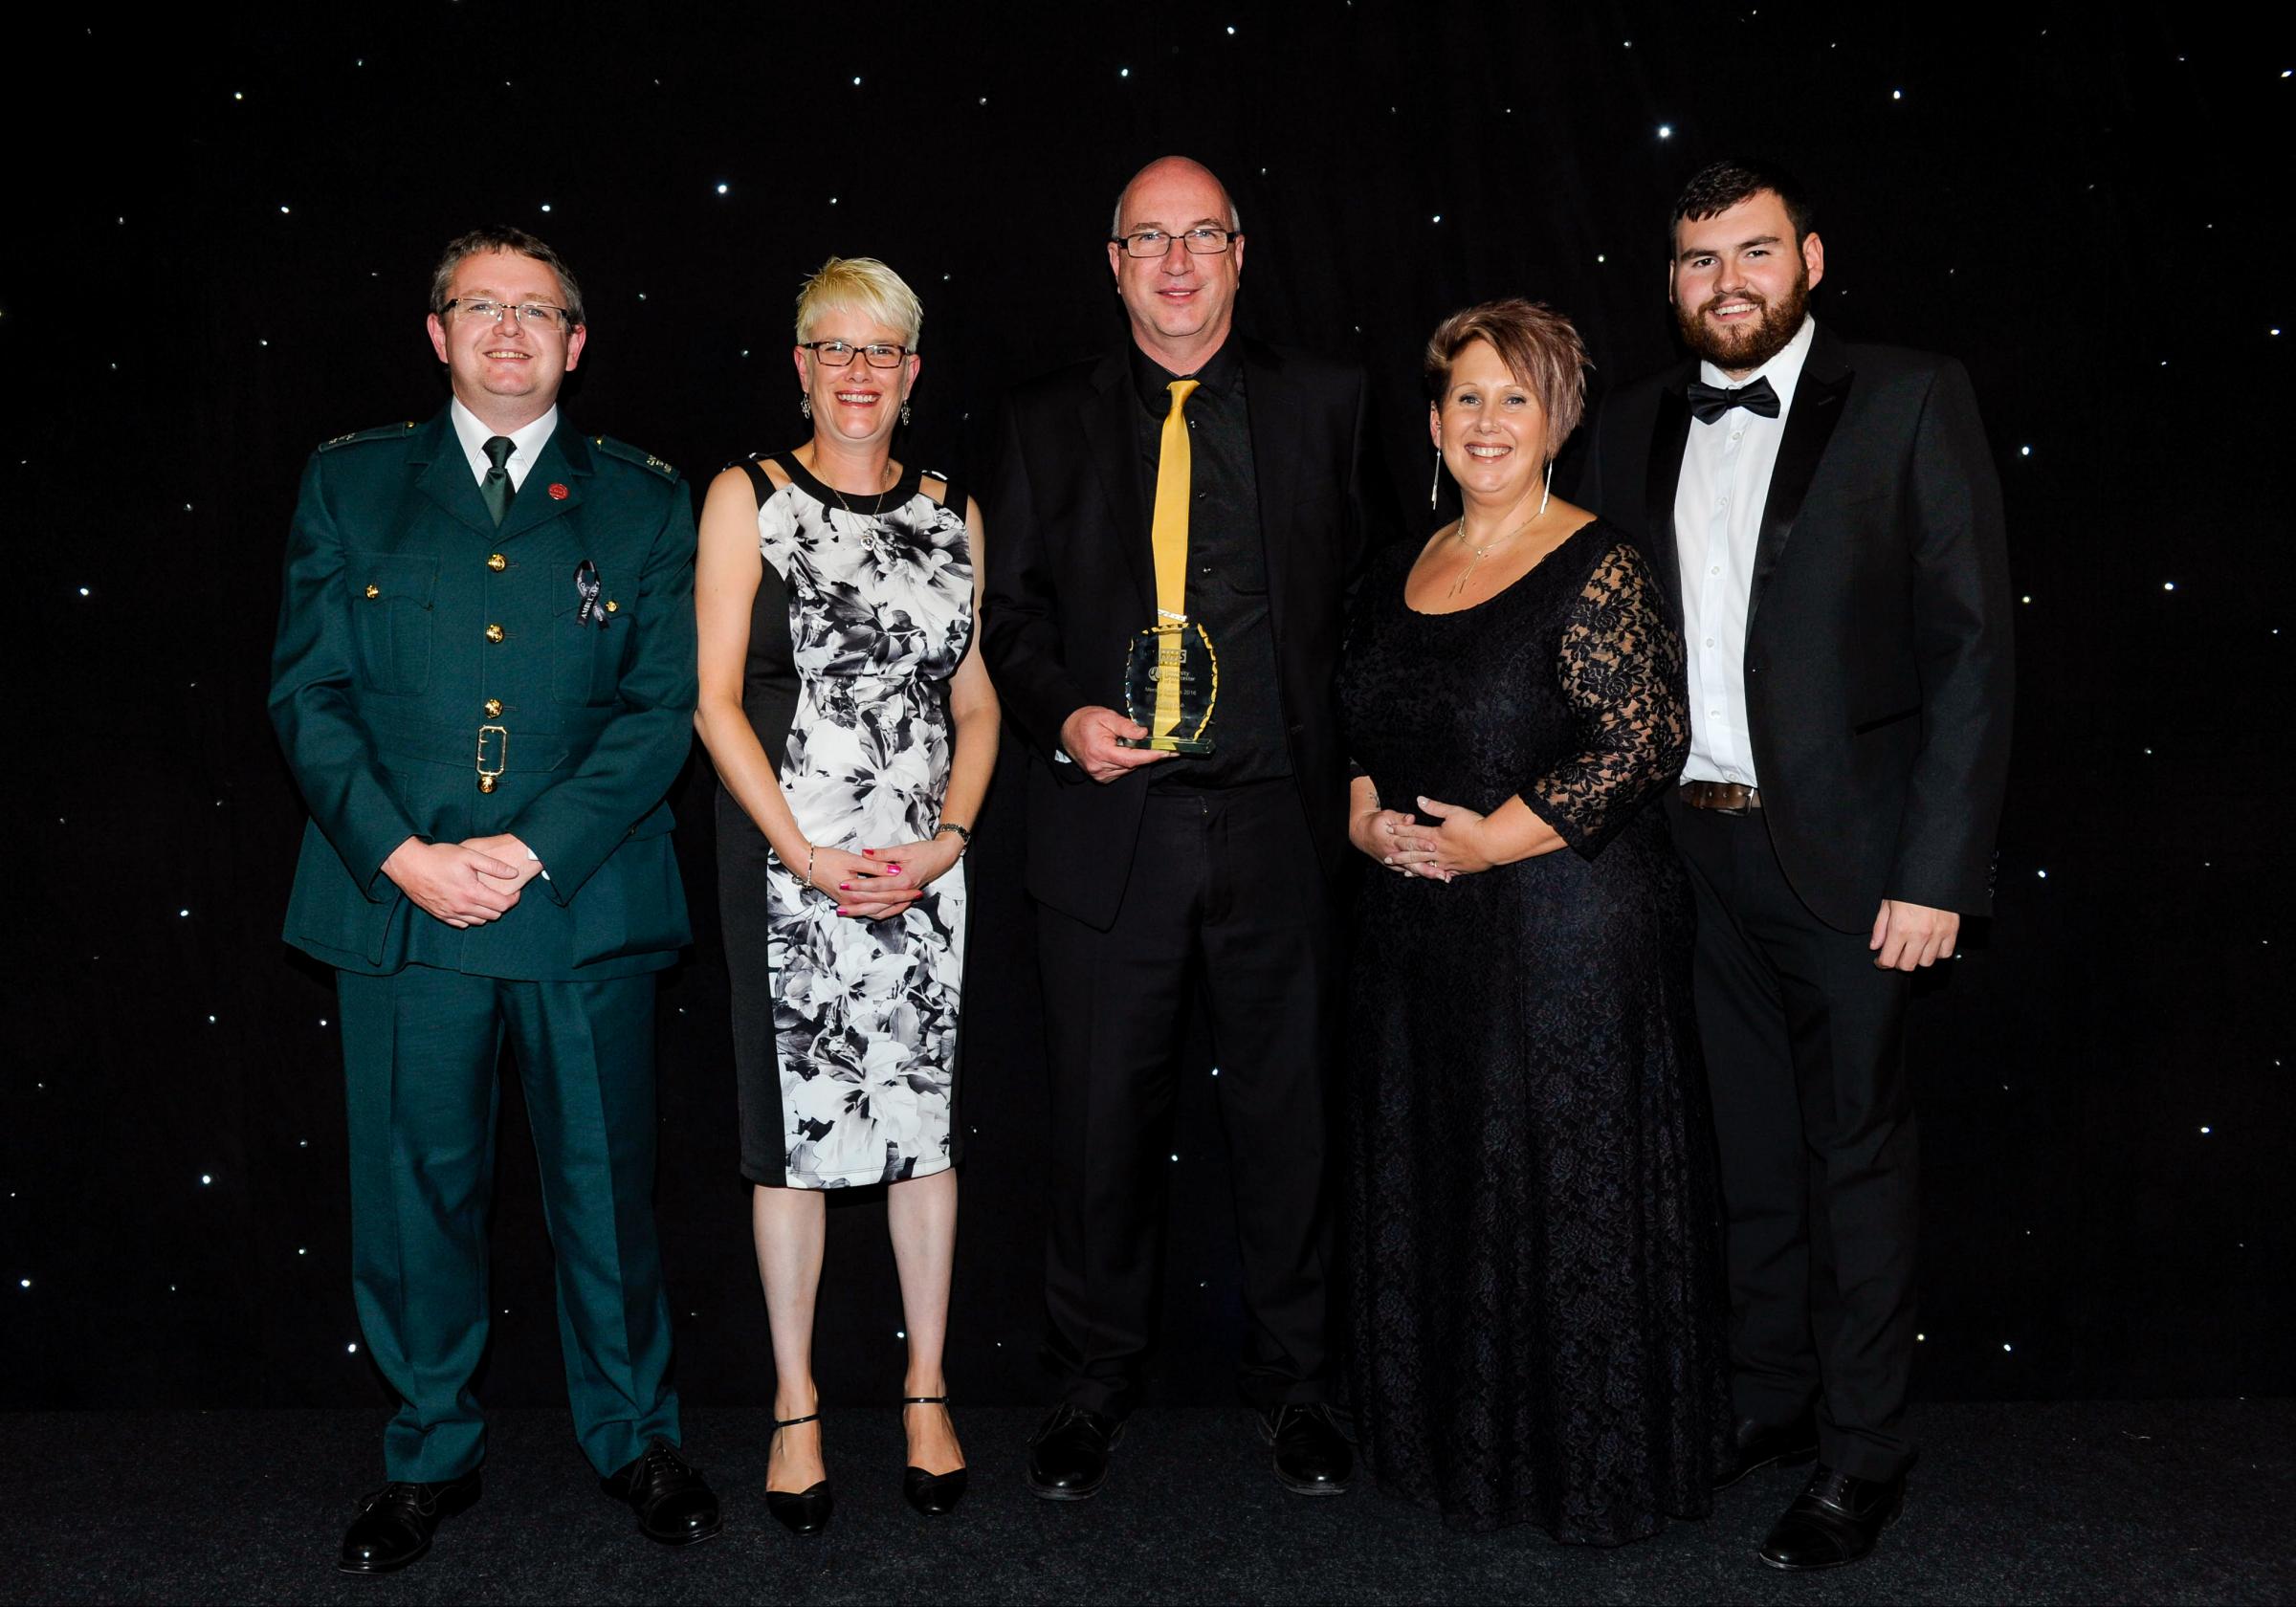 Dudley paramedics celebrated at university's Mentor Awards - Dudley News